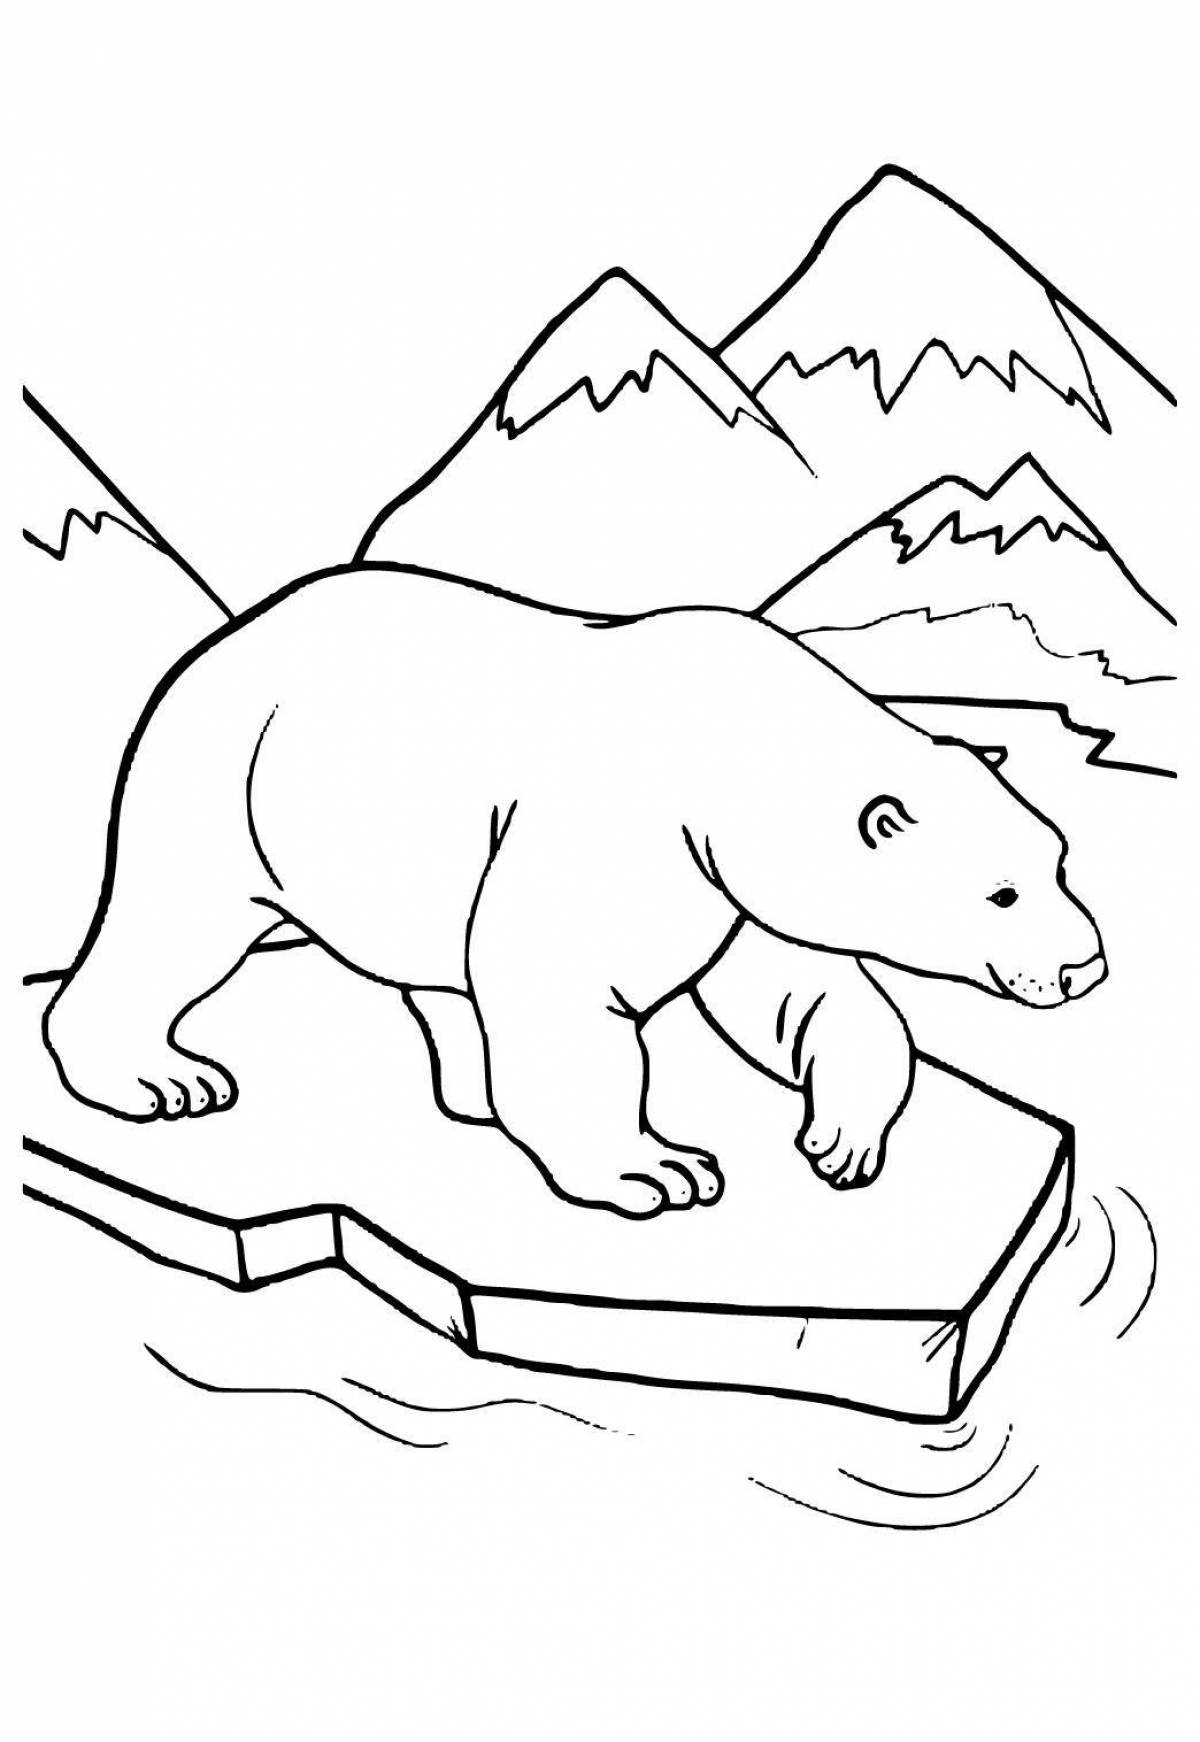 Coloring book nice polar bear on ice